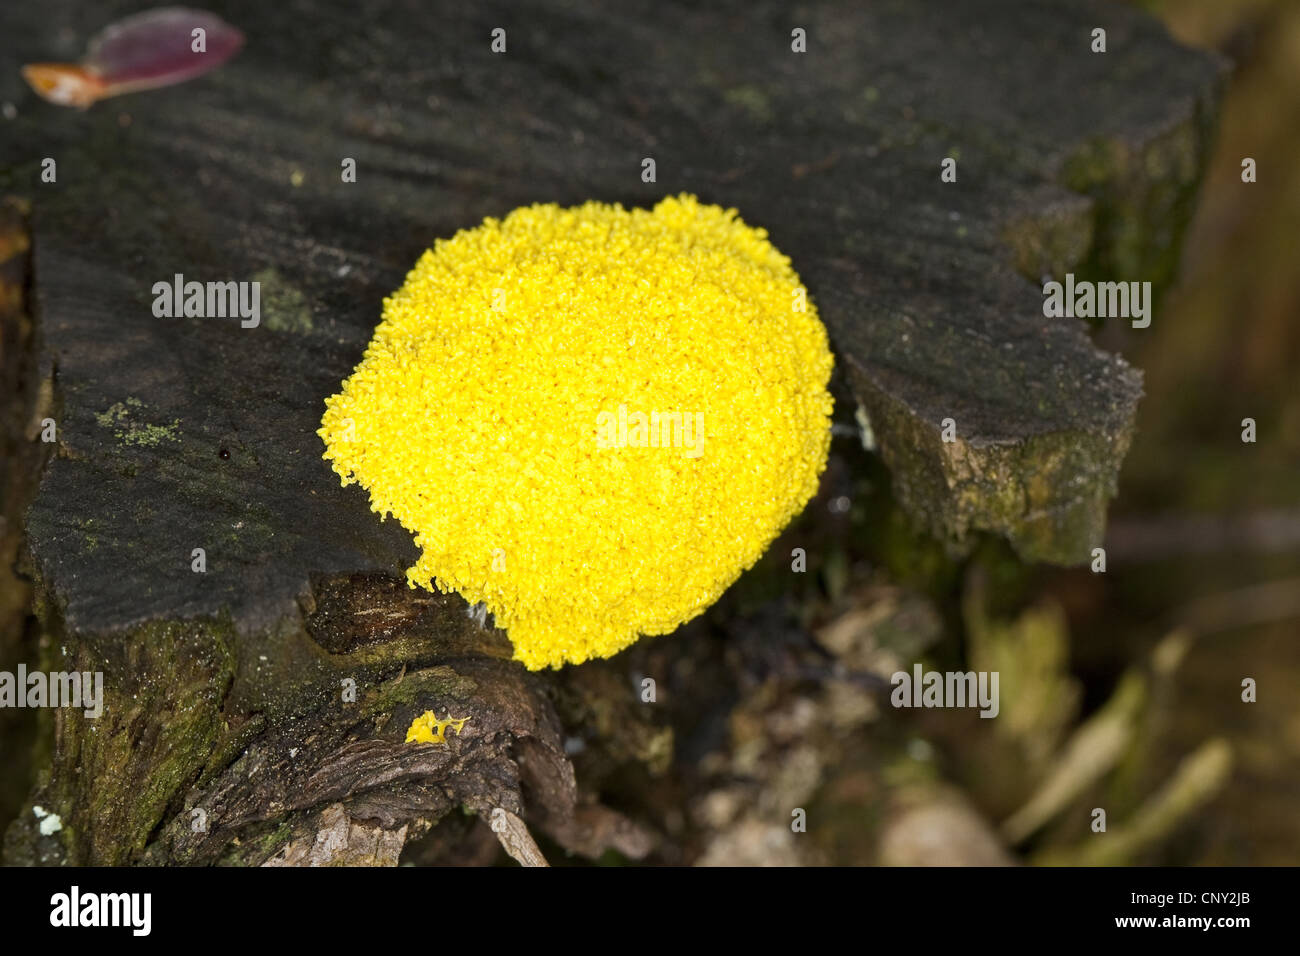 Sulphur Slime Fungus (Fuligo septica), slime mould on dead wood, Germany Stock Photo